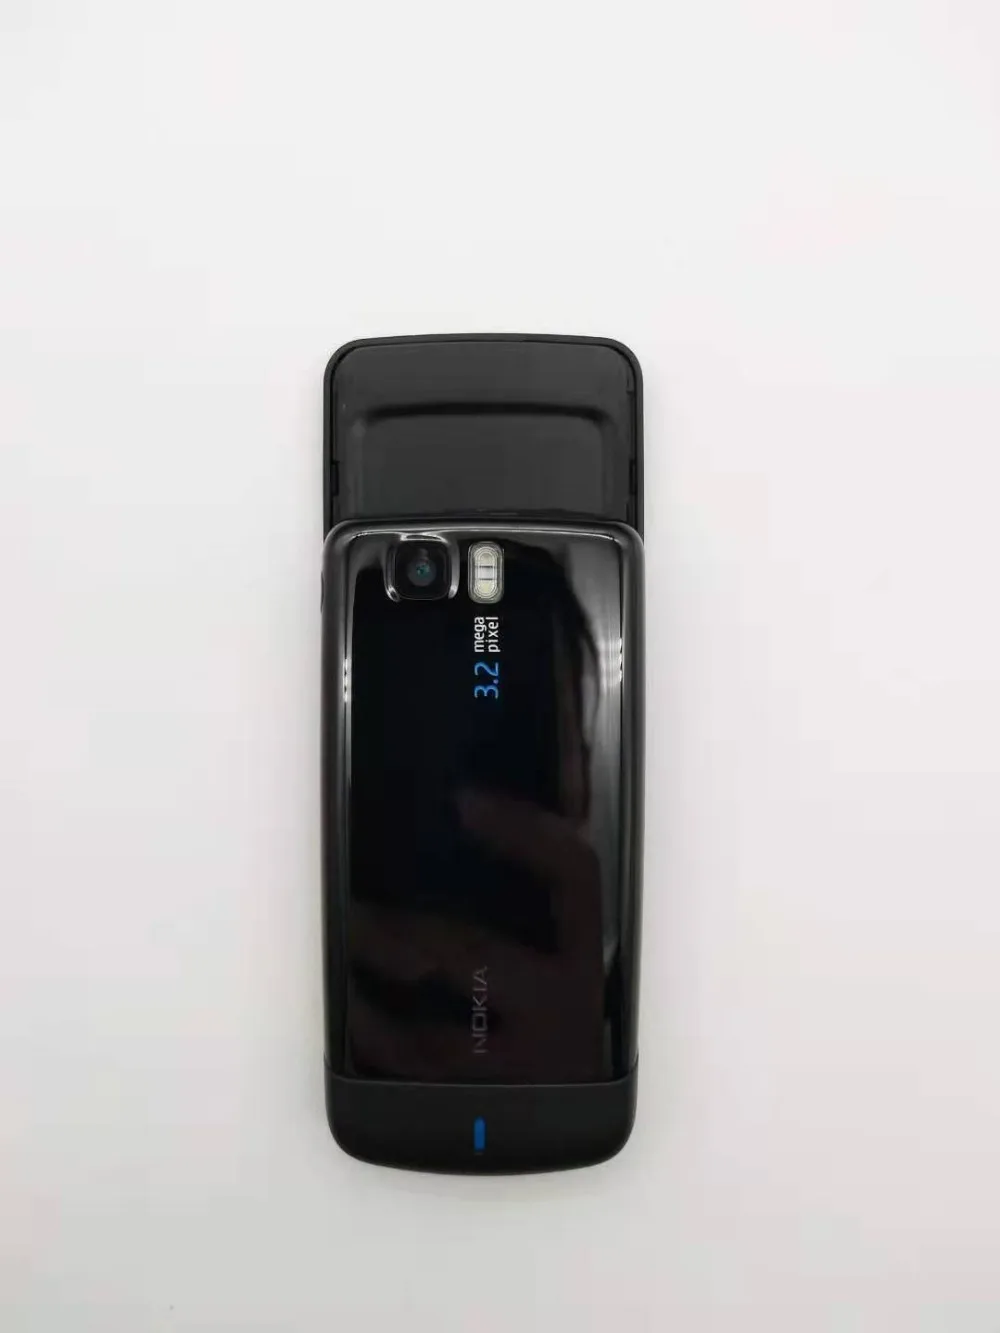 nokia 6600s refurbished original phone nokia 6600 slide refurbished cell phone black color in stock free global shipping